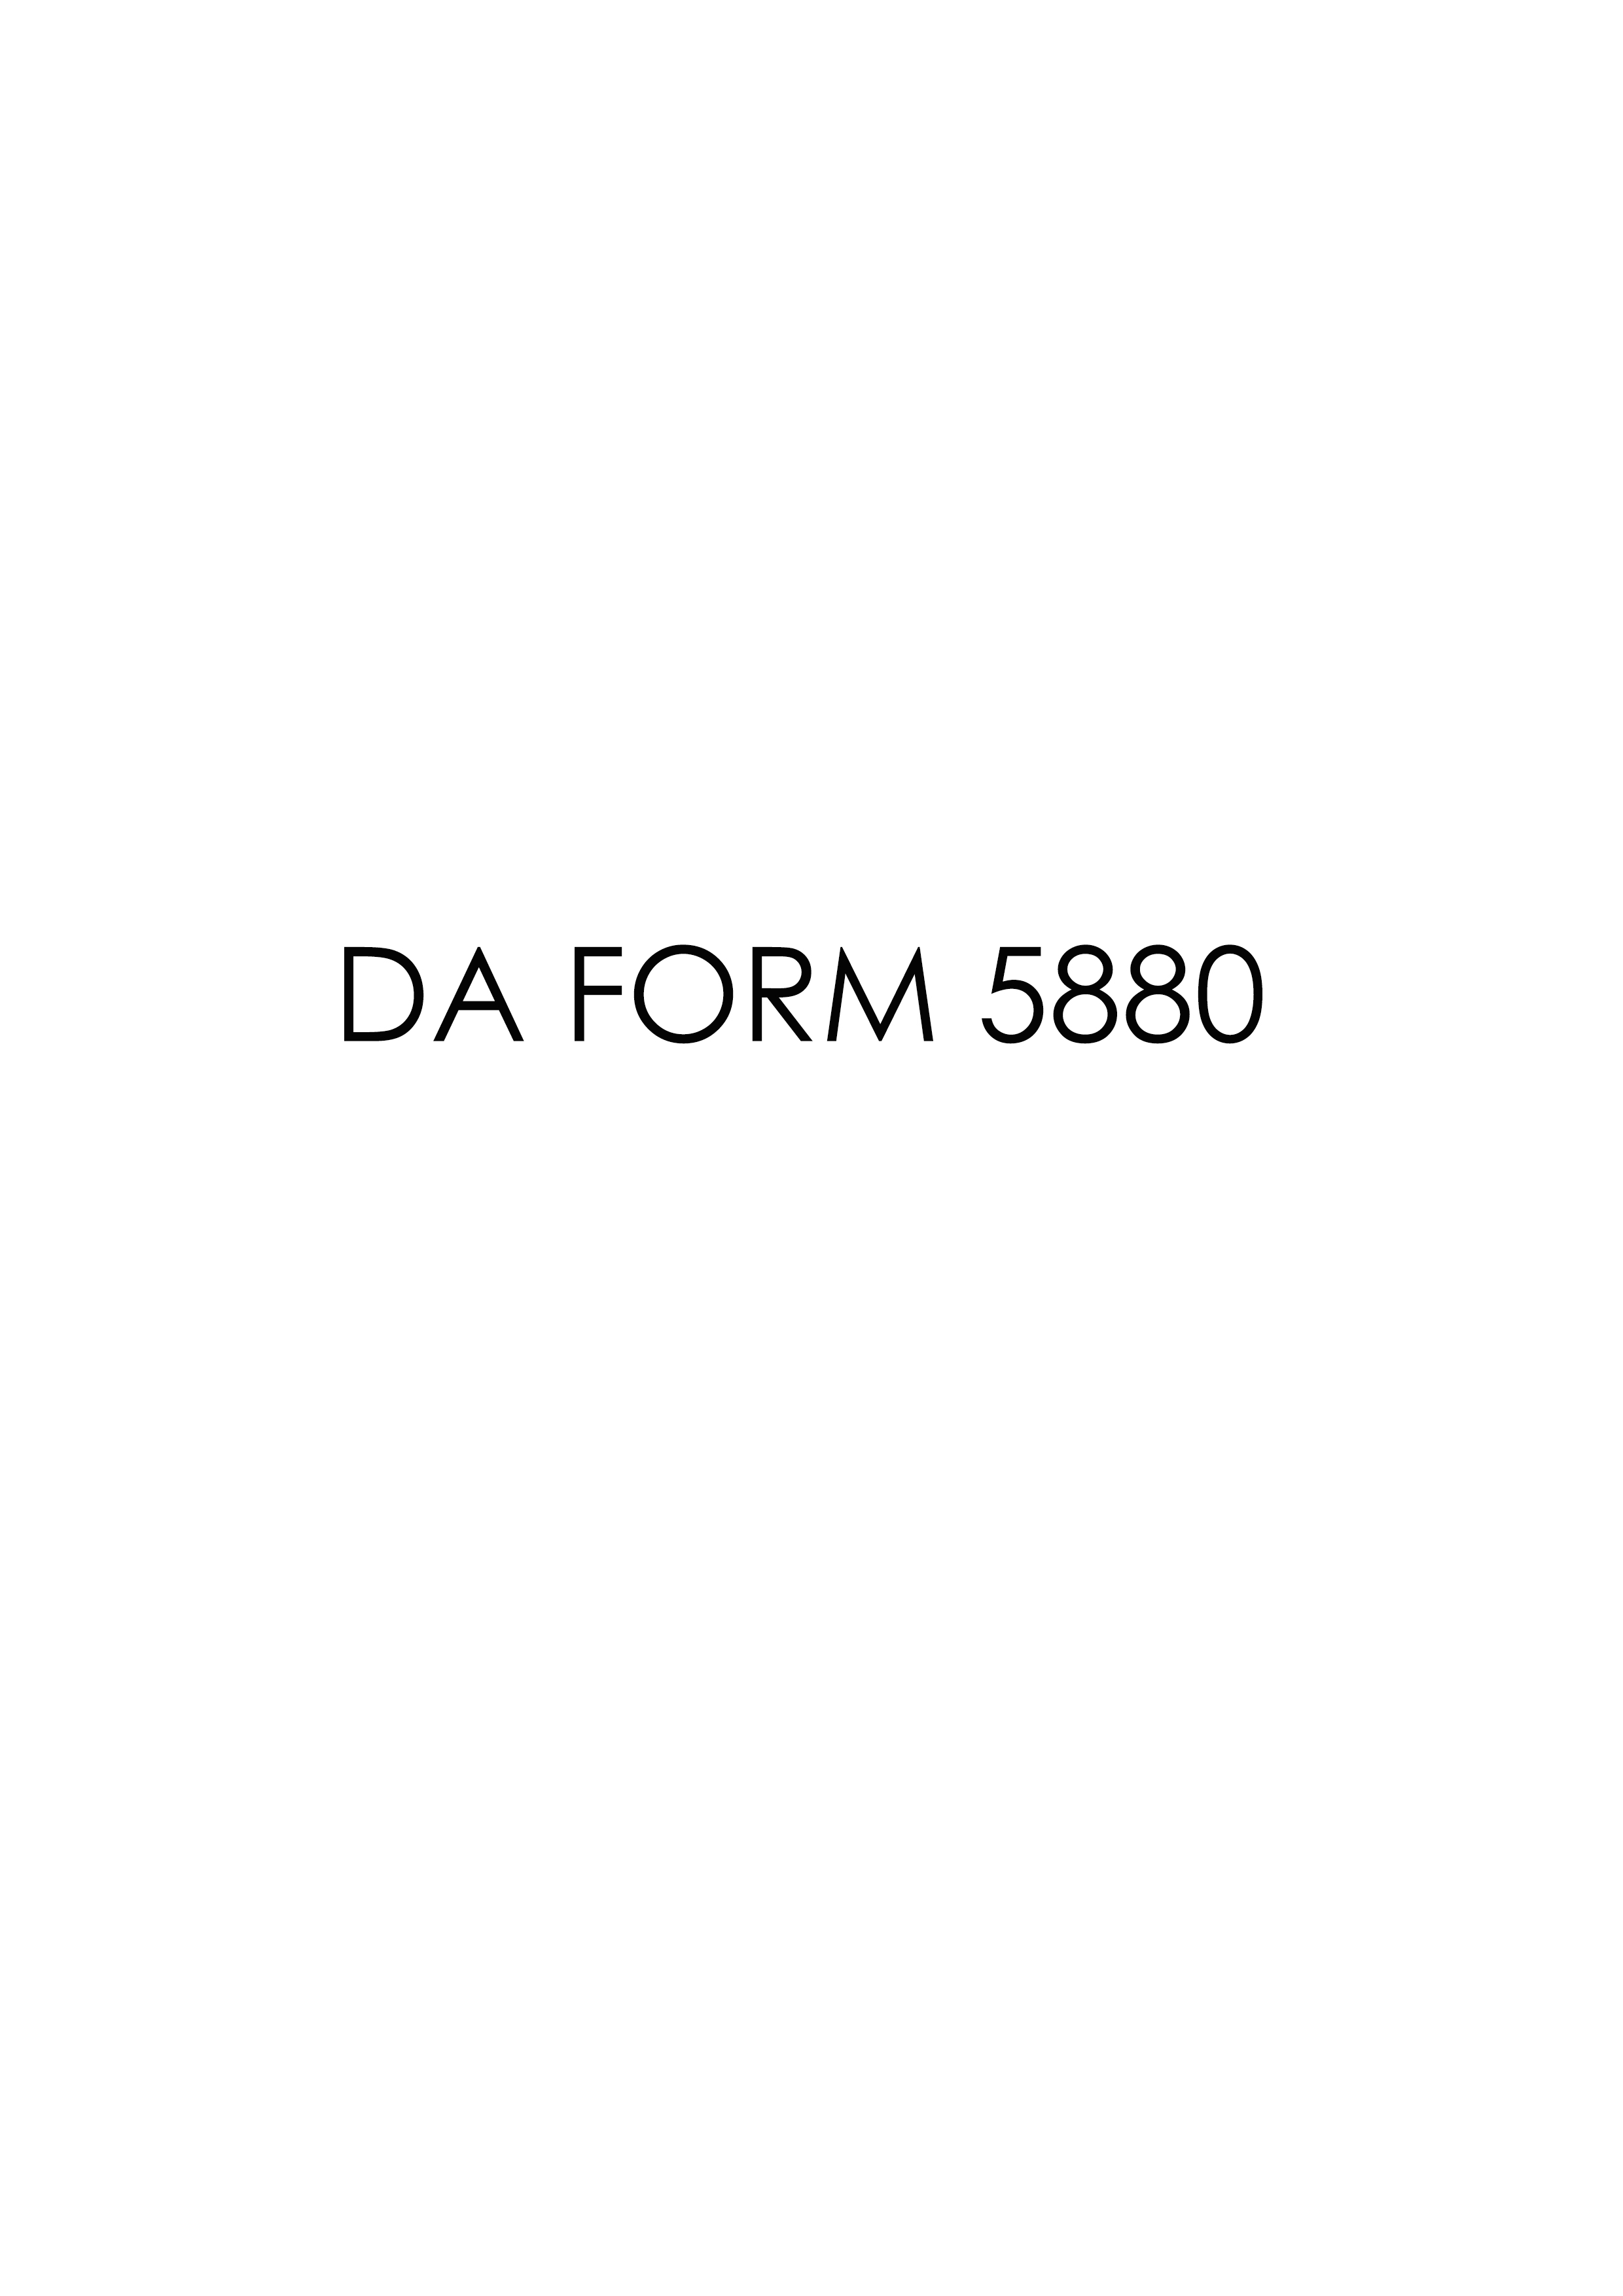 da Form 5880 fillable